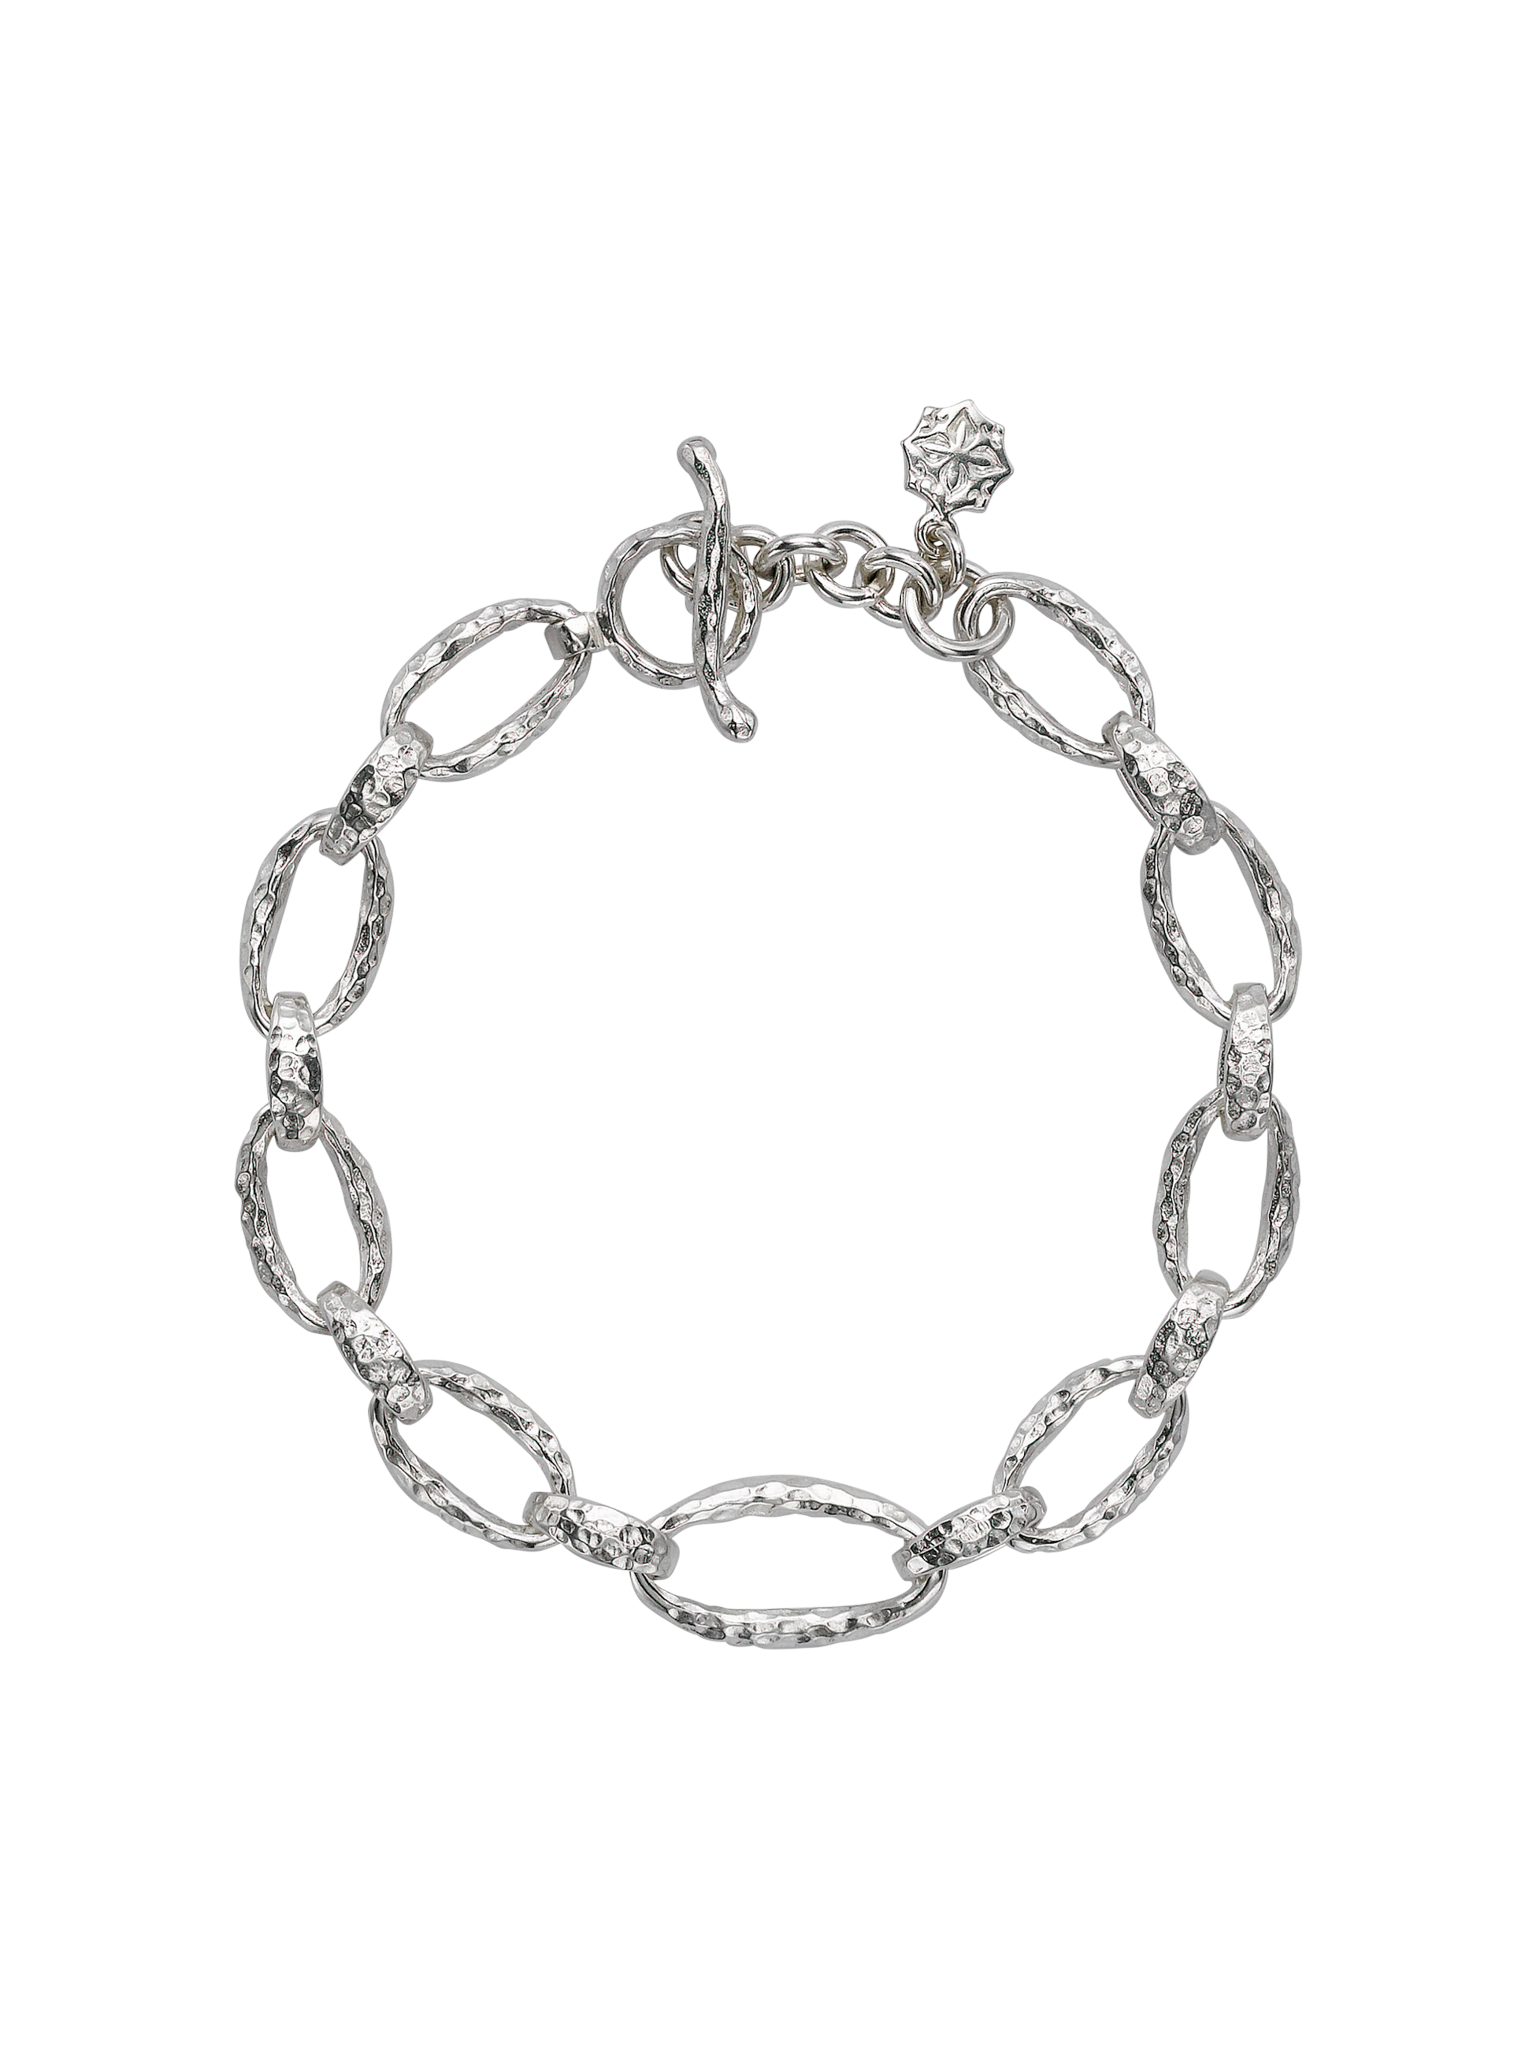 Oval link nomad bracelet